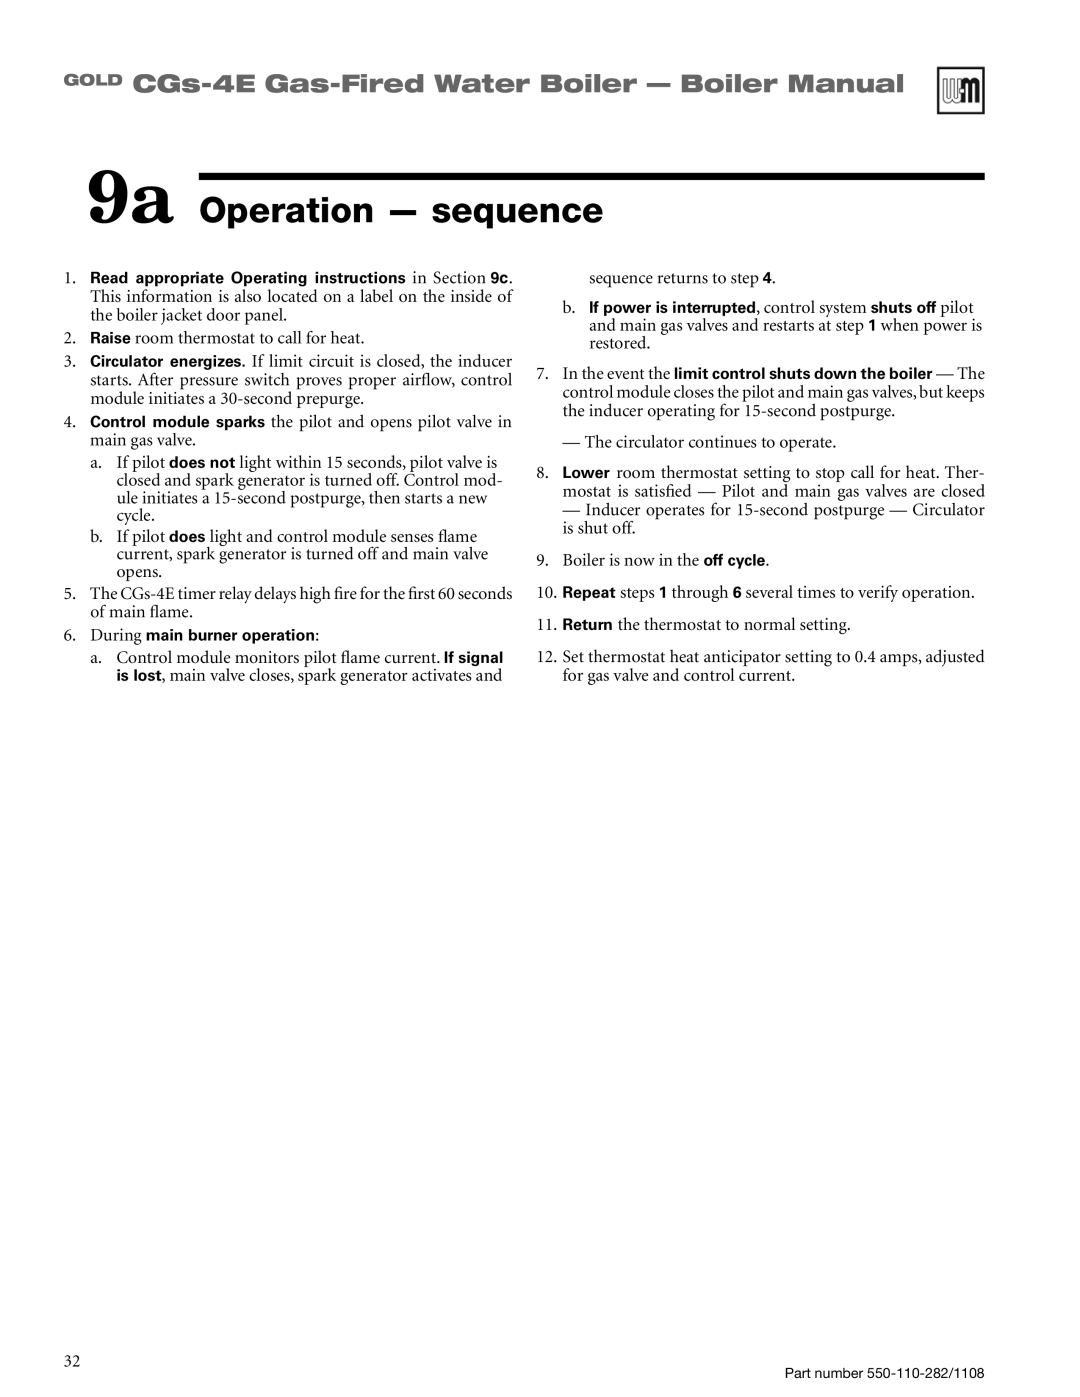 Weil-McLain CGS-4E manual 9a Operation - sequence, GOLD CGs-4E Gas-FiredWater Boiler - Boiler Manual 